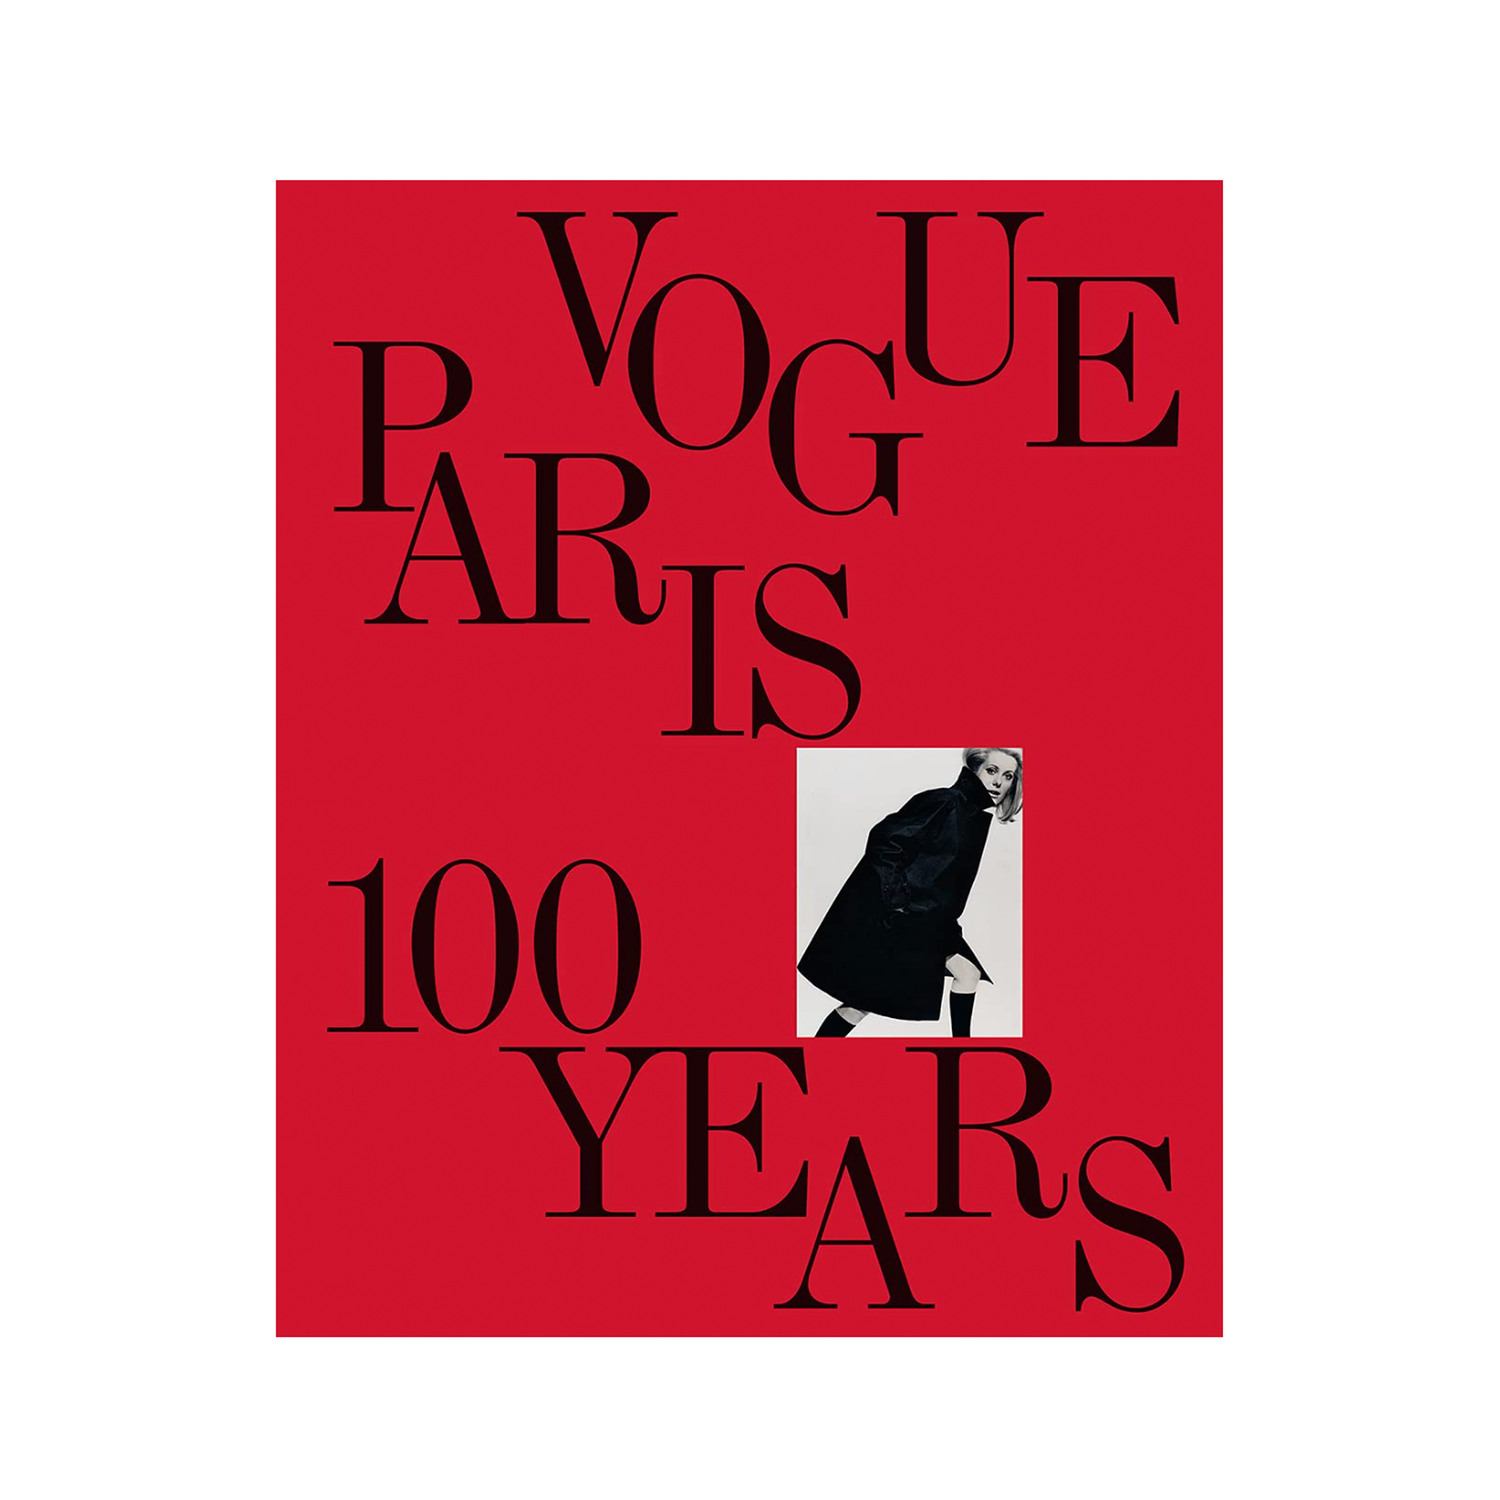 Vogue Paris 100 Years book